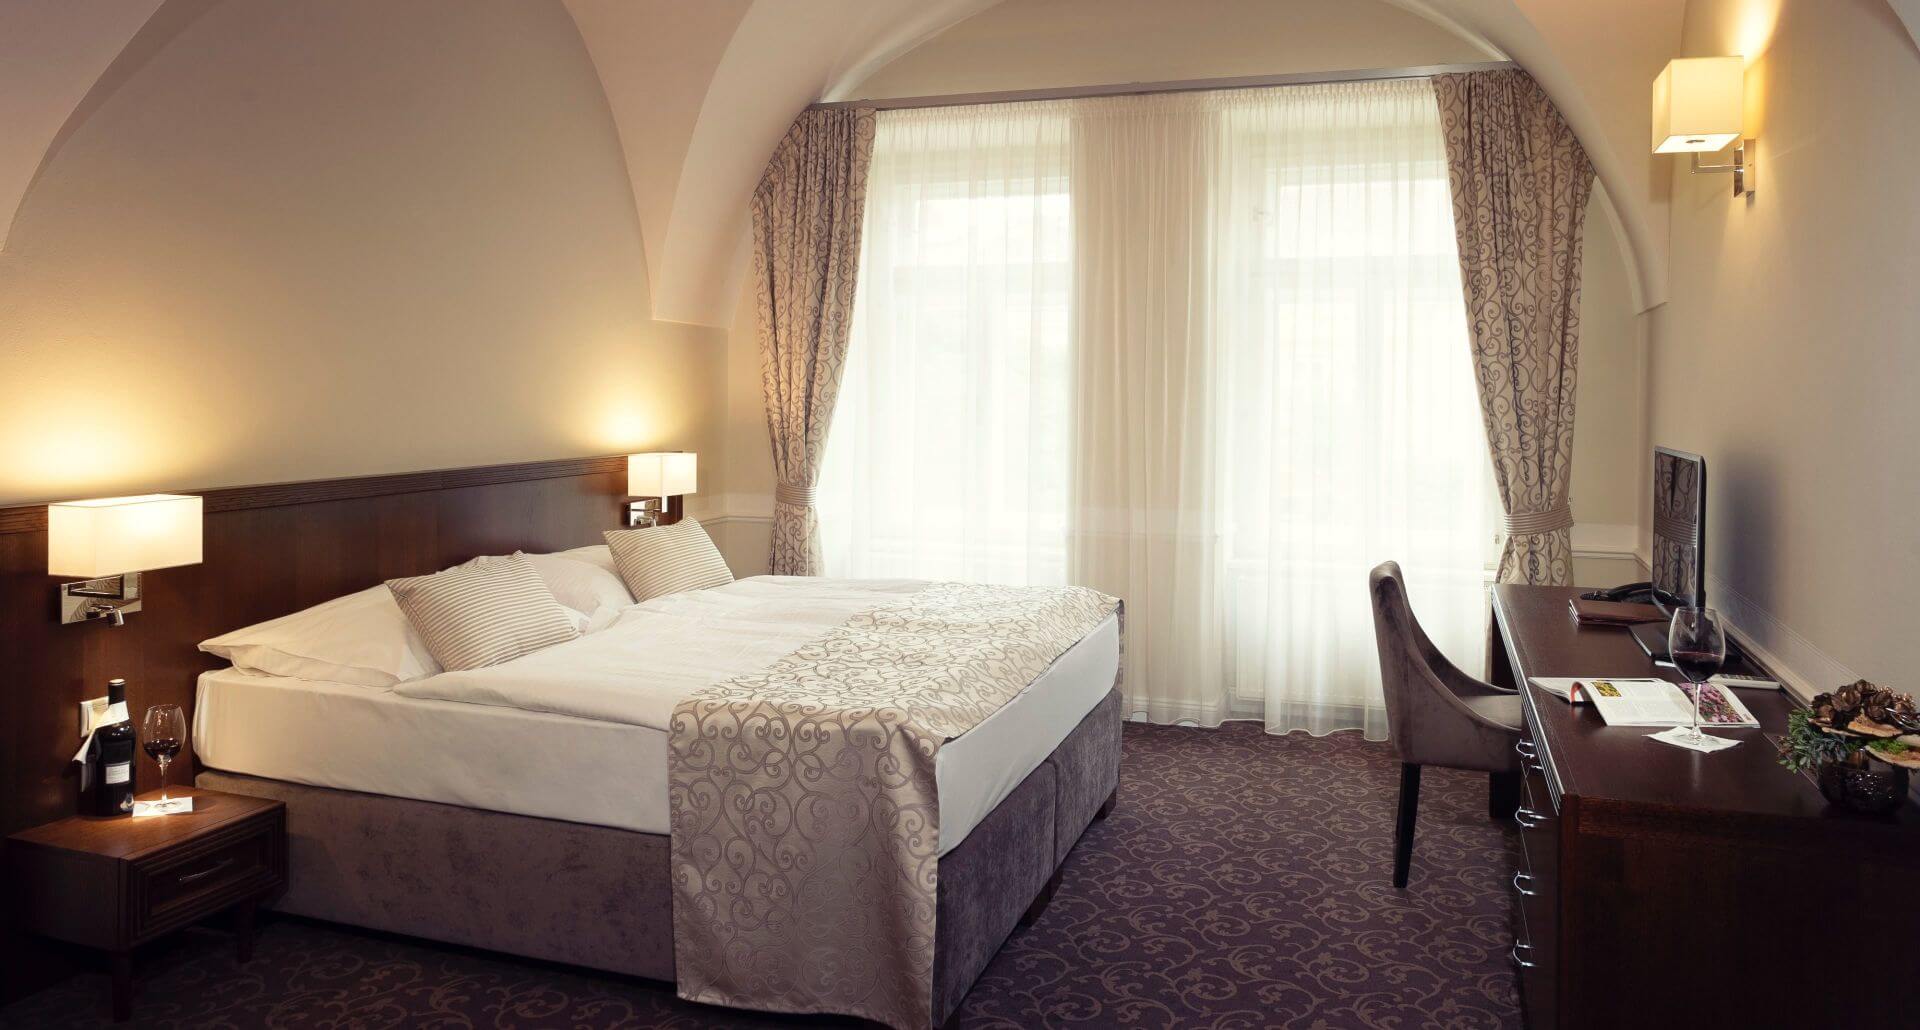 Luxusná hotelová posteľ